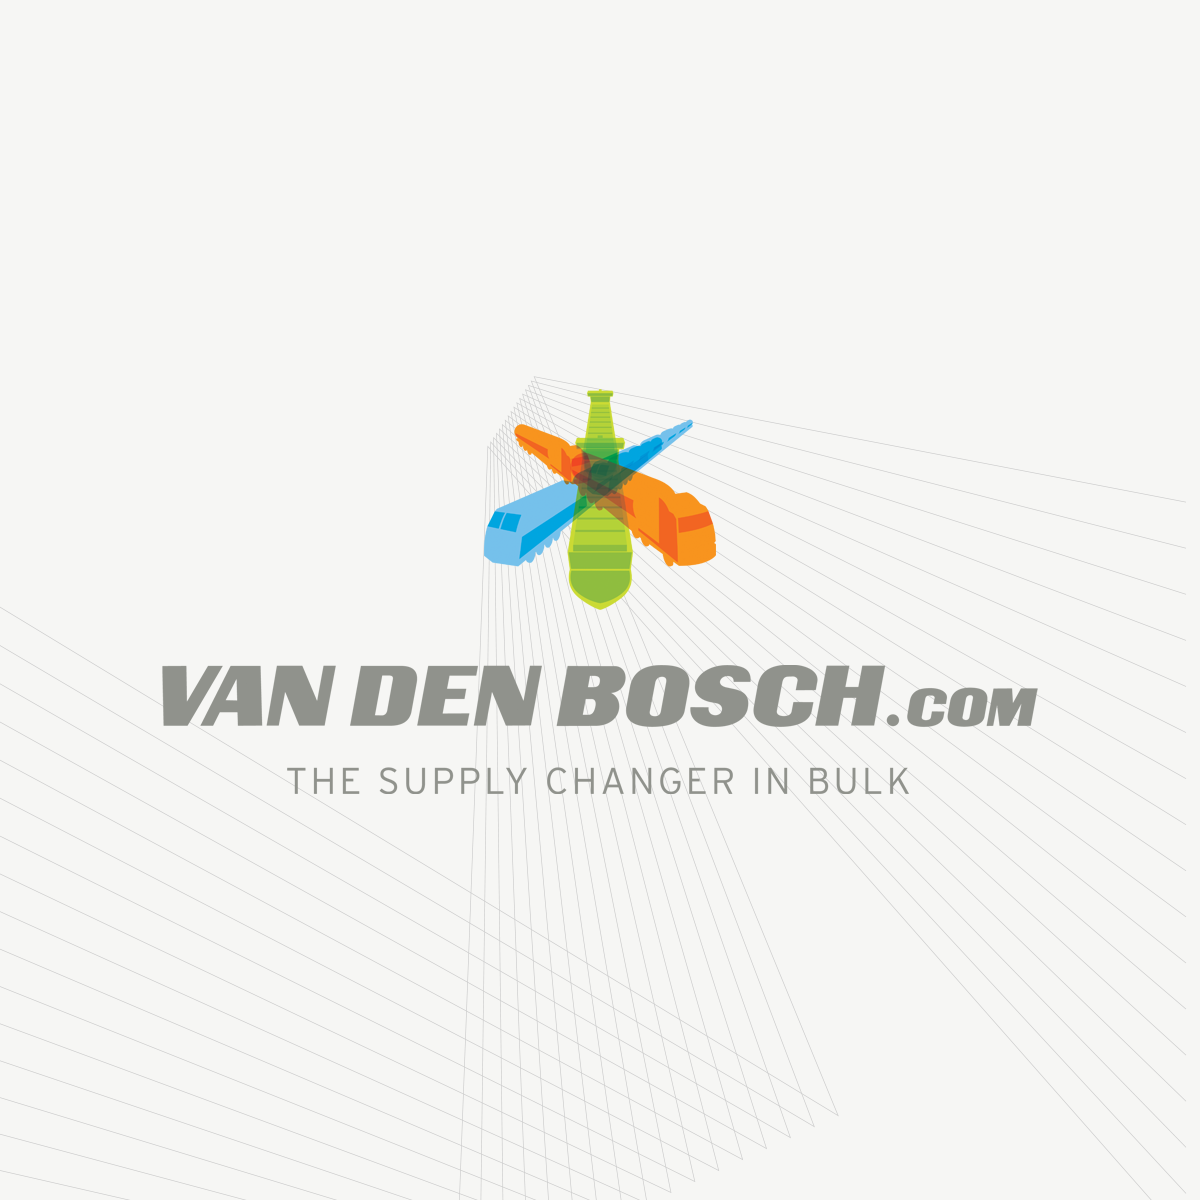 (c) Vandenbosch.com